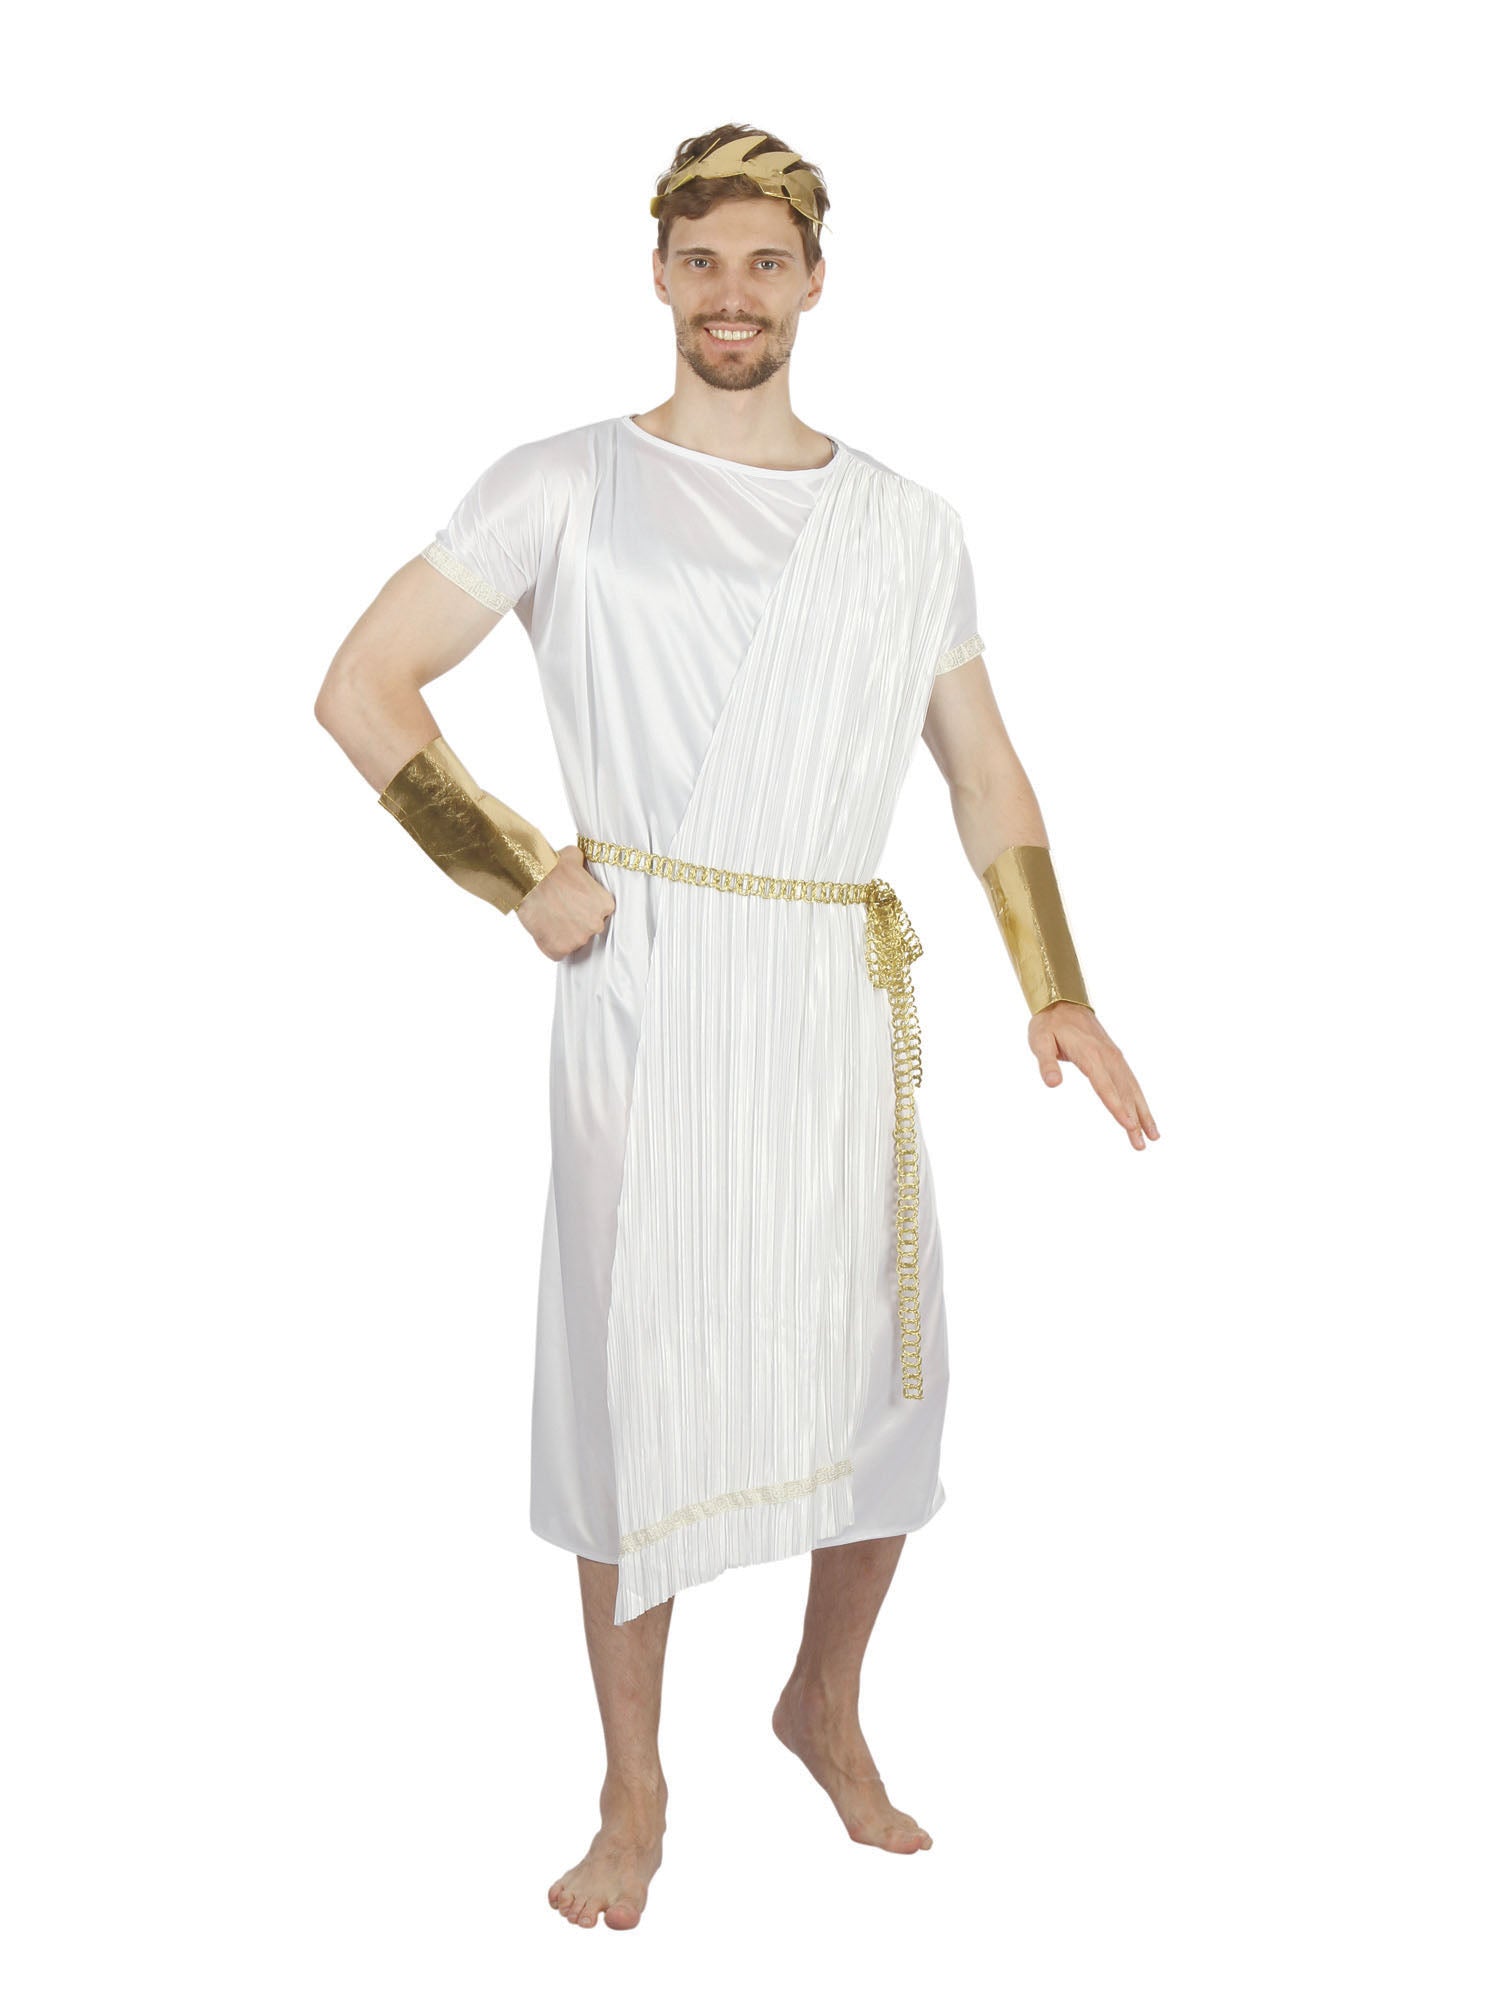 Greek, multi-colored, Generic, Adult Costume, Standard, Front